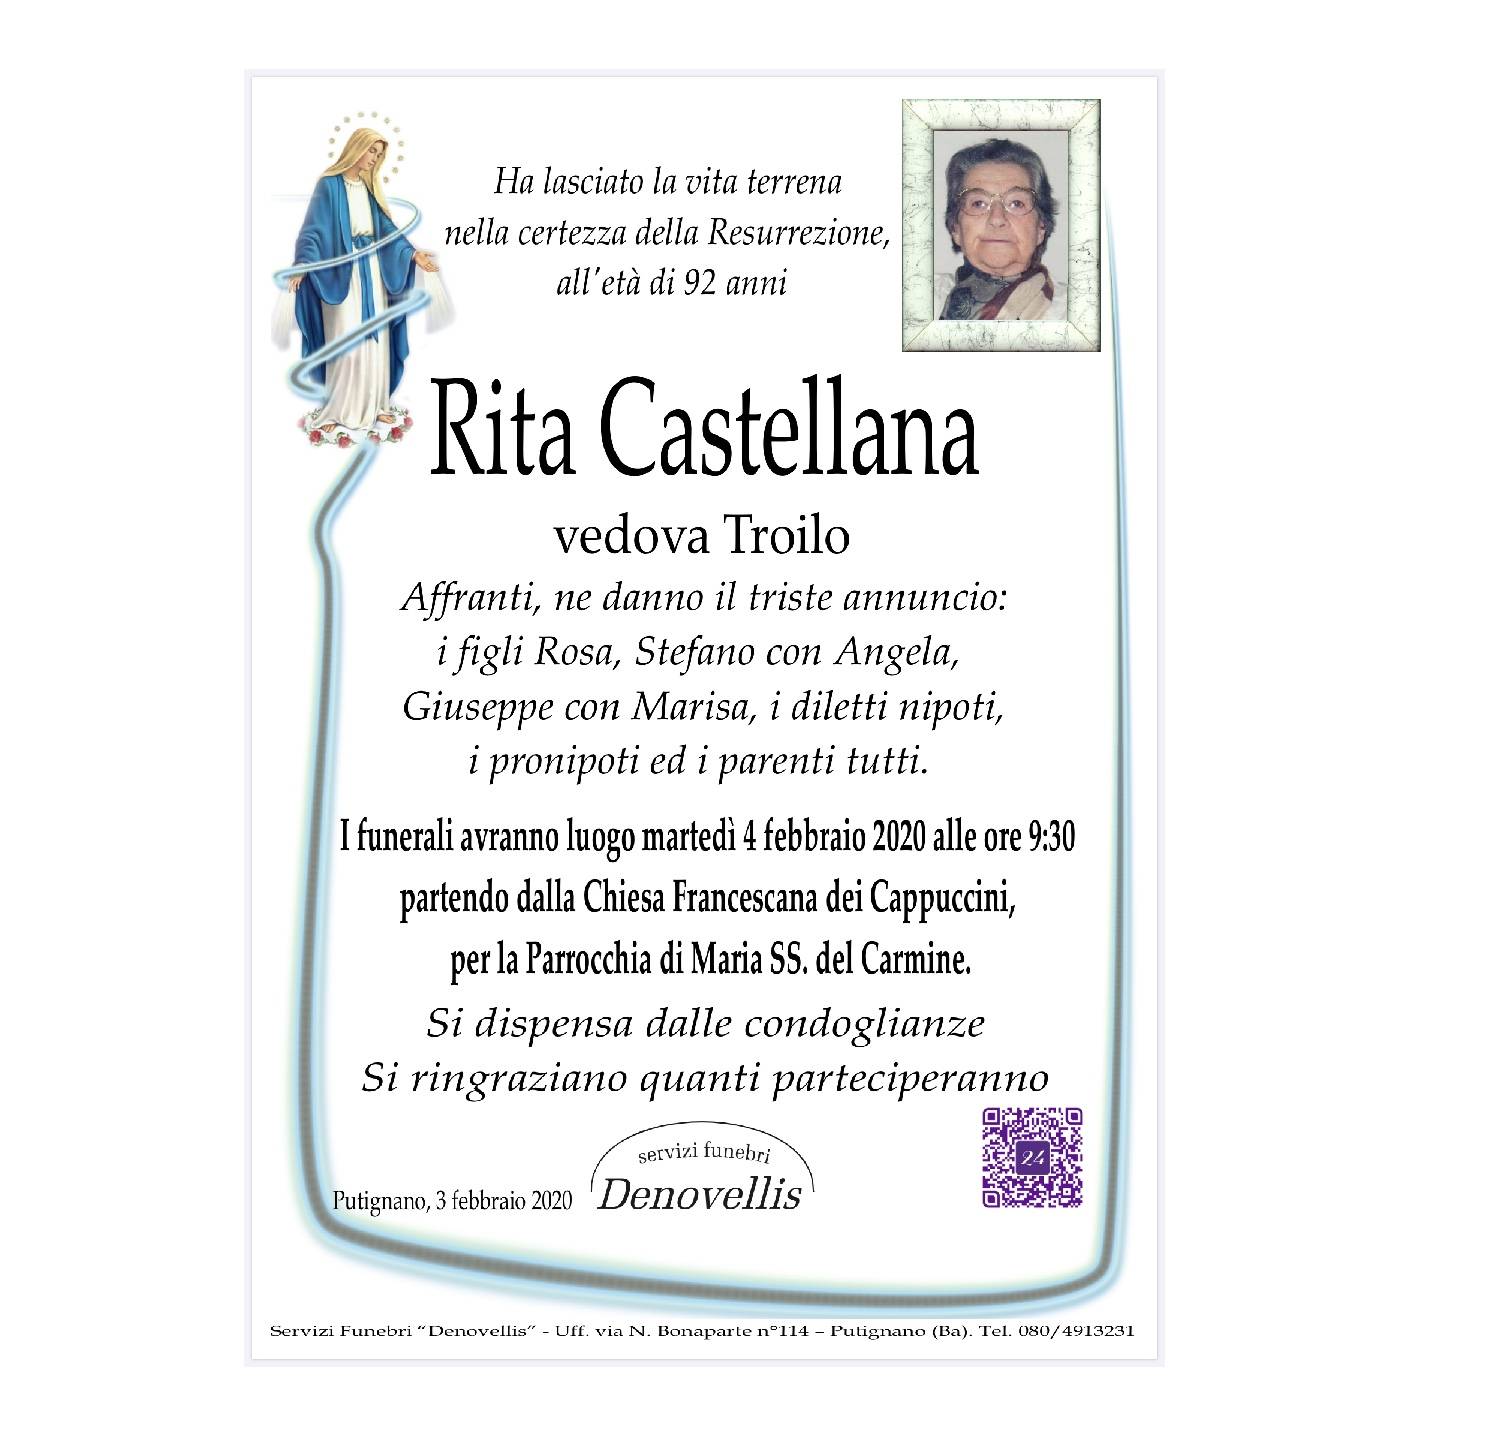 Rita Castellana